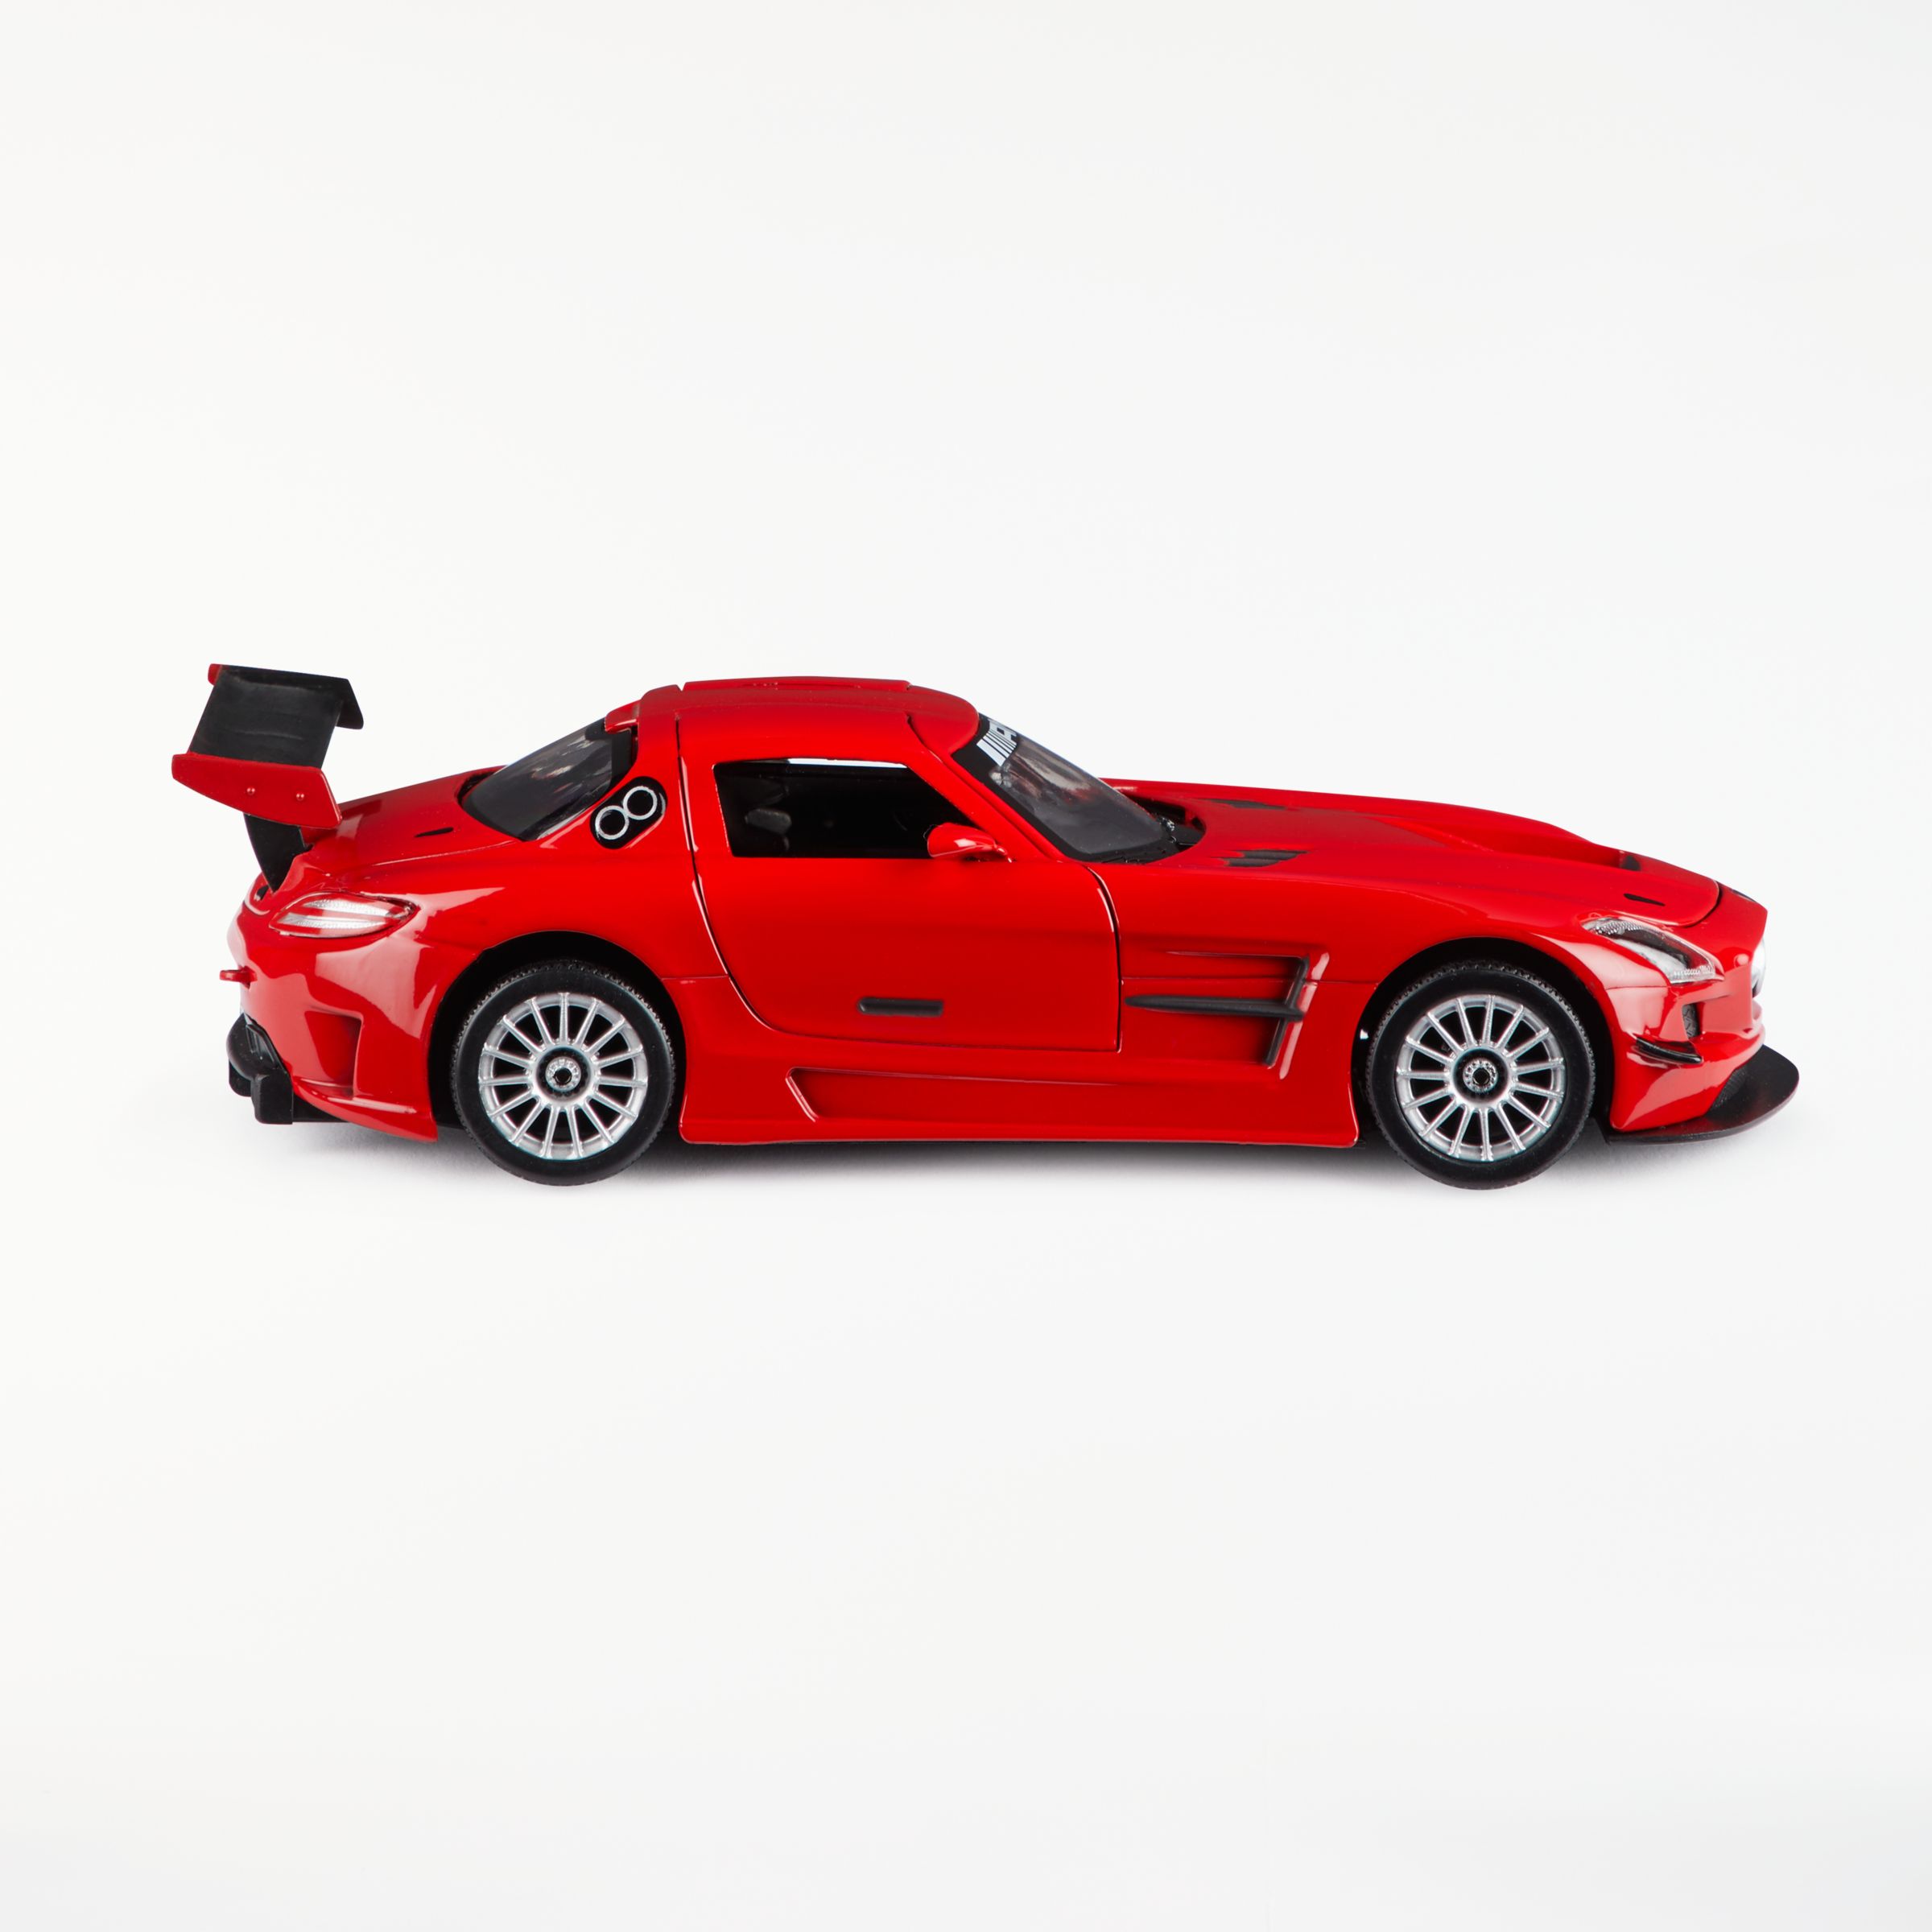 John Lewis & Partners 1:24 Mercedes AMG Red Die-cast Toy Car